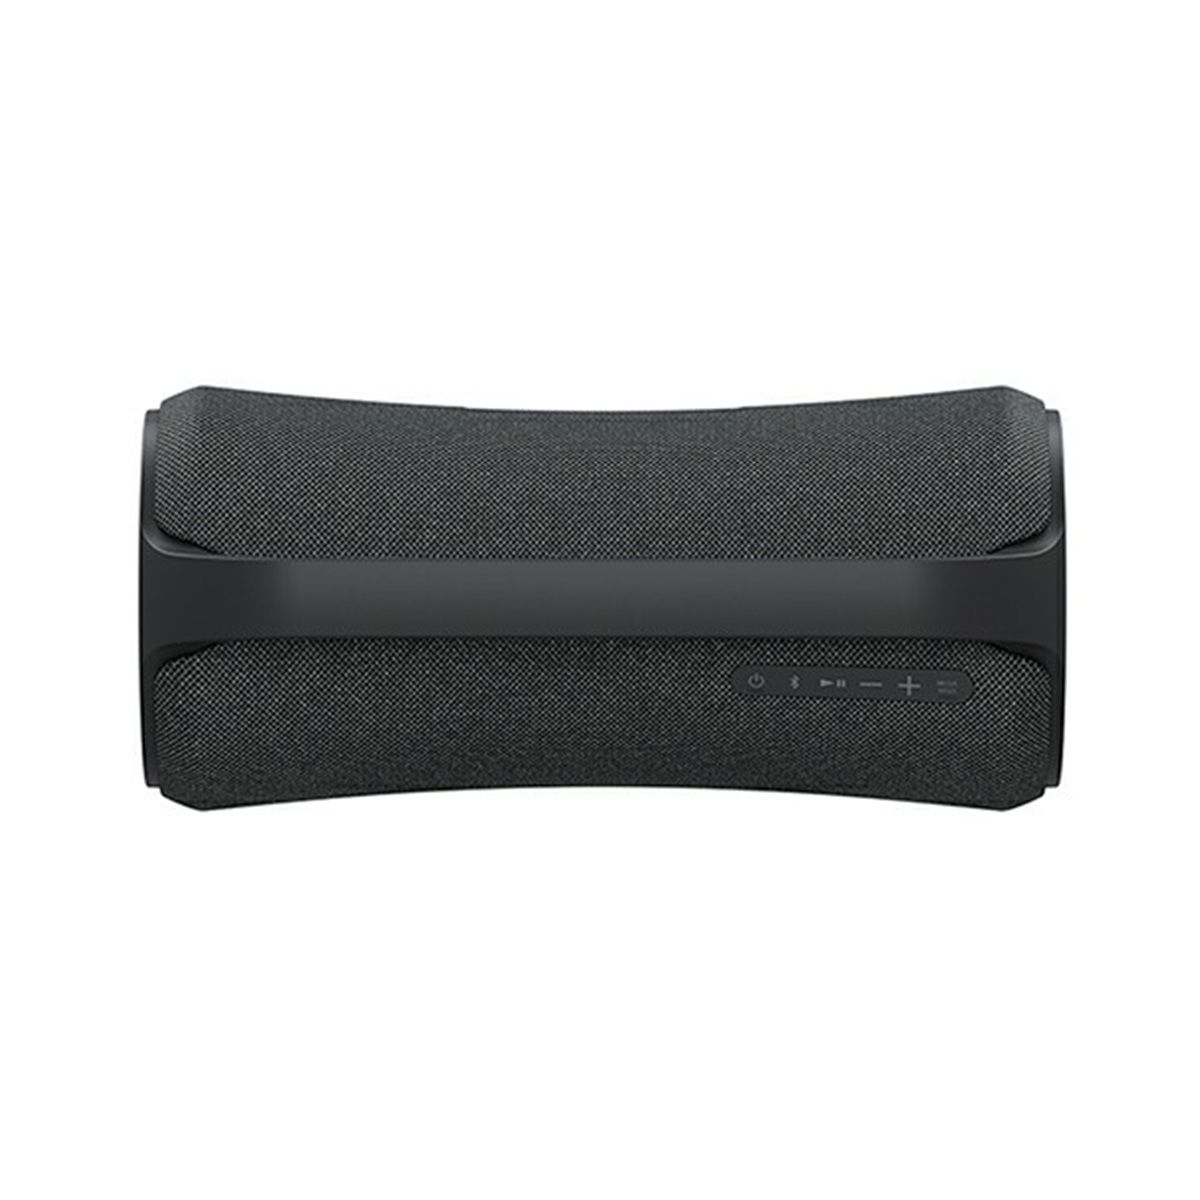 SONY ลำโพงไร้สาย รุ่น XG500 X-Series Portable Wireless Speaker